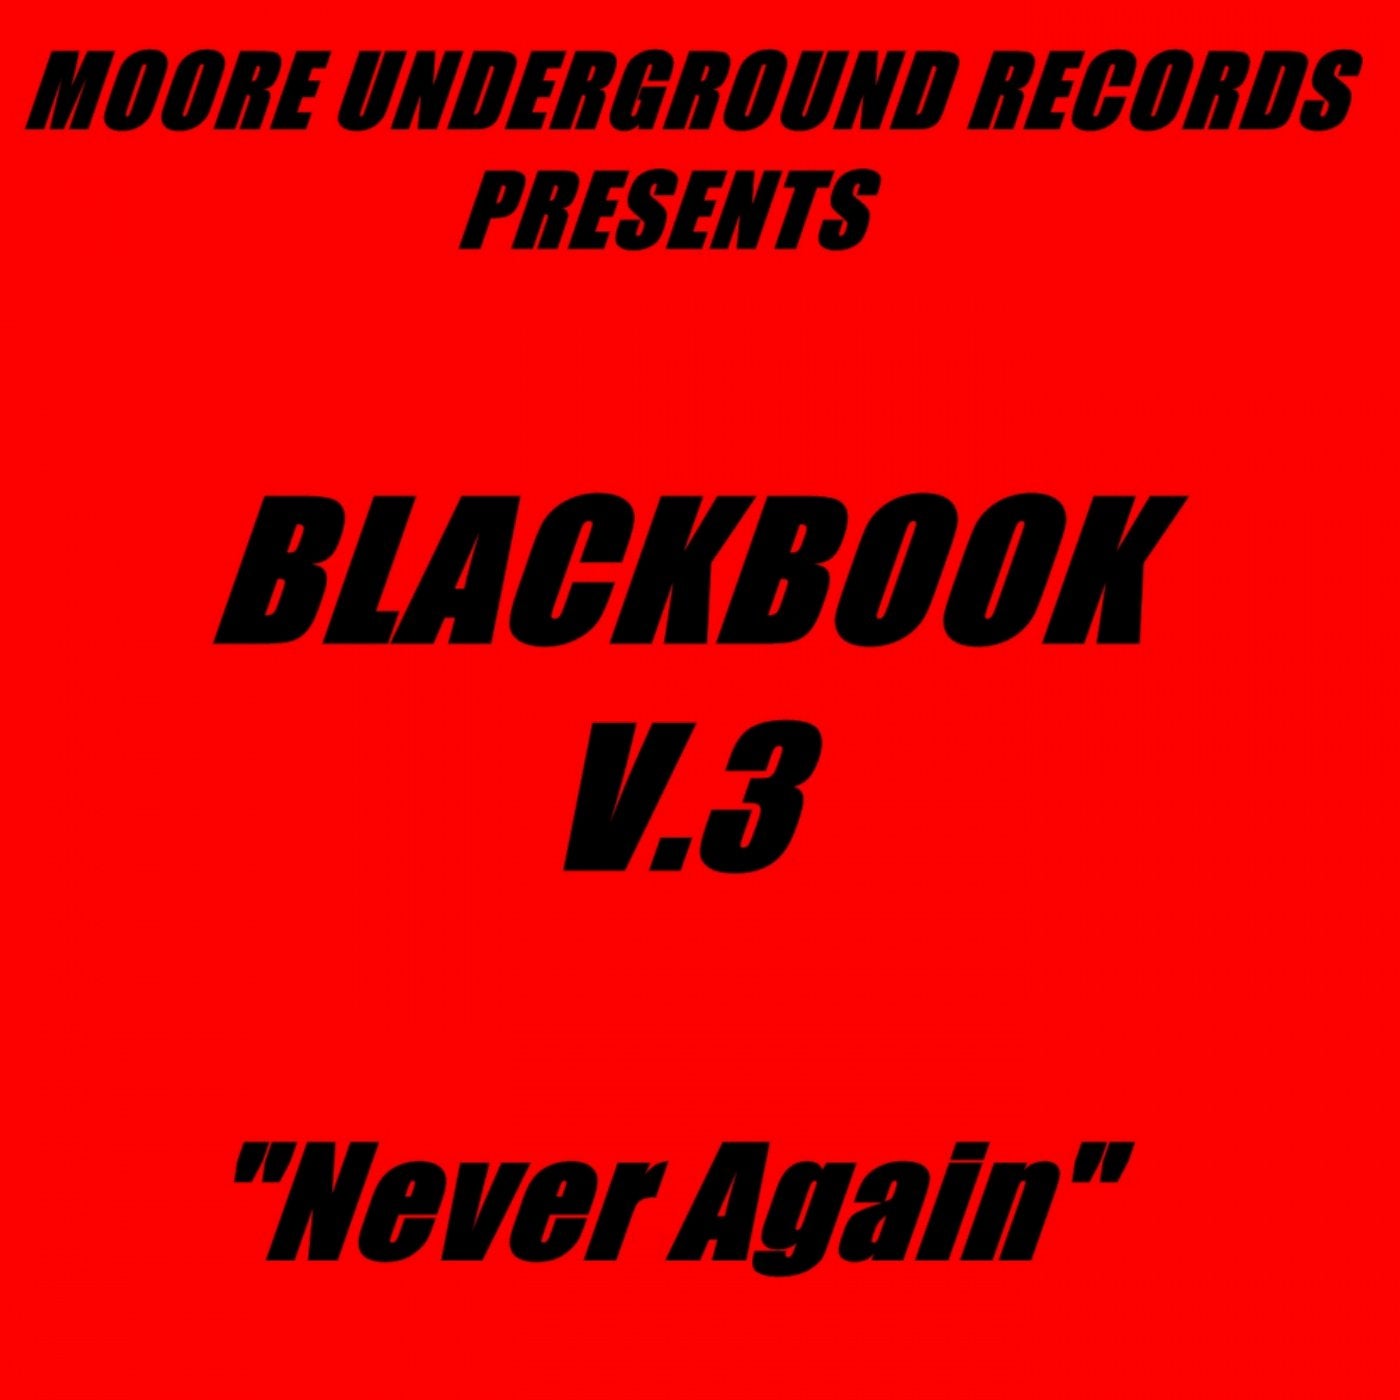 Blackbook 03  Never again